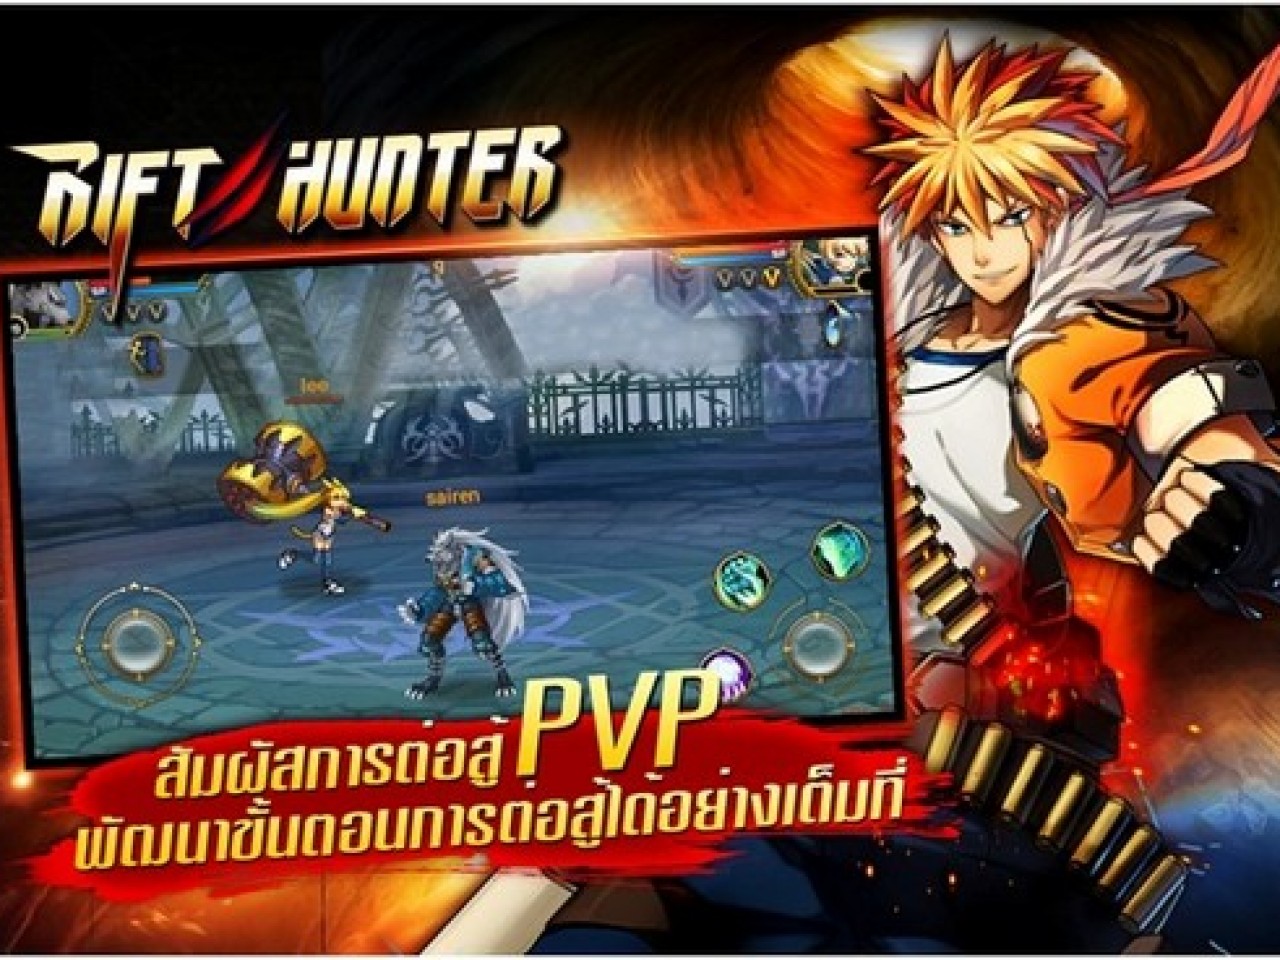 Rift Hunter เกมต่อสู้บนมือถือ พร้อมเปิดความมันส์ CBT 9 ม.ค. นี้